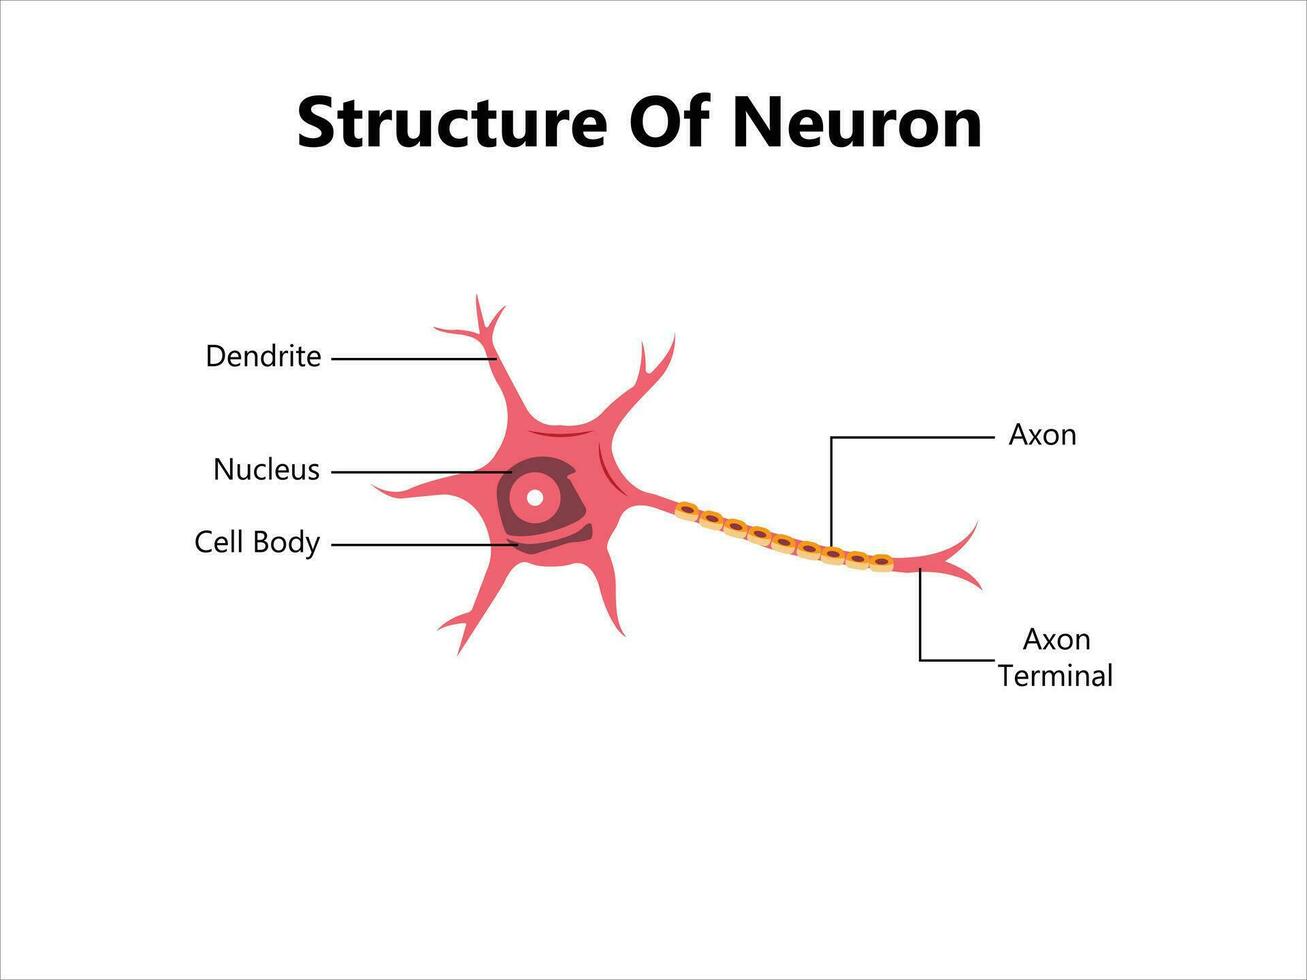 Mensch Neuron Struktur. Gehirn Neuron Zelle Illustration. Synapsen, Myelin Mantel, Zelle Körper, Kern, Axon und Dendriten planen. Neurologie Illustration vektor